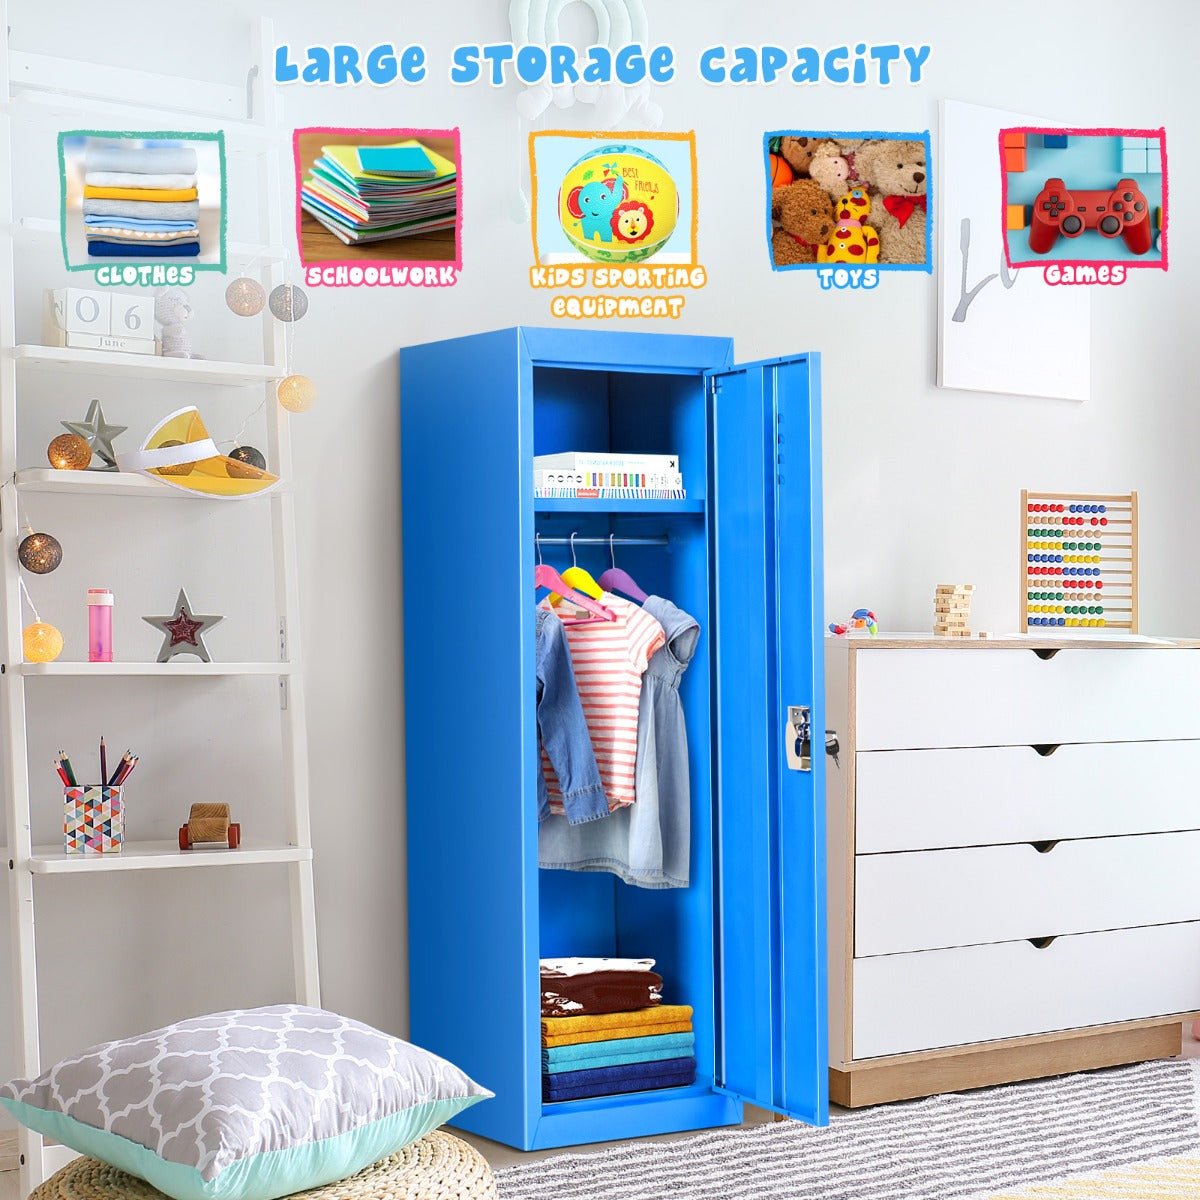 122cm Metal Storage Locker for Children - Hanging Rod and Shelf Included